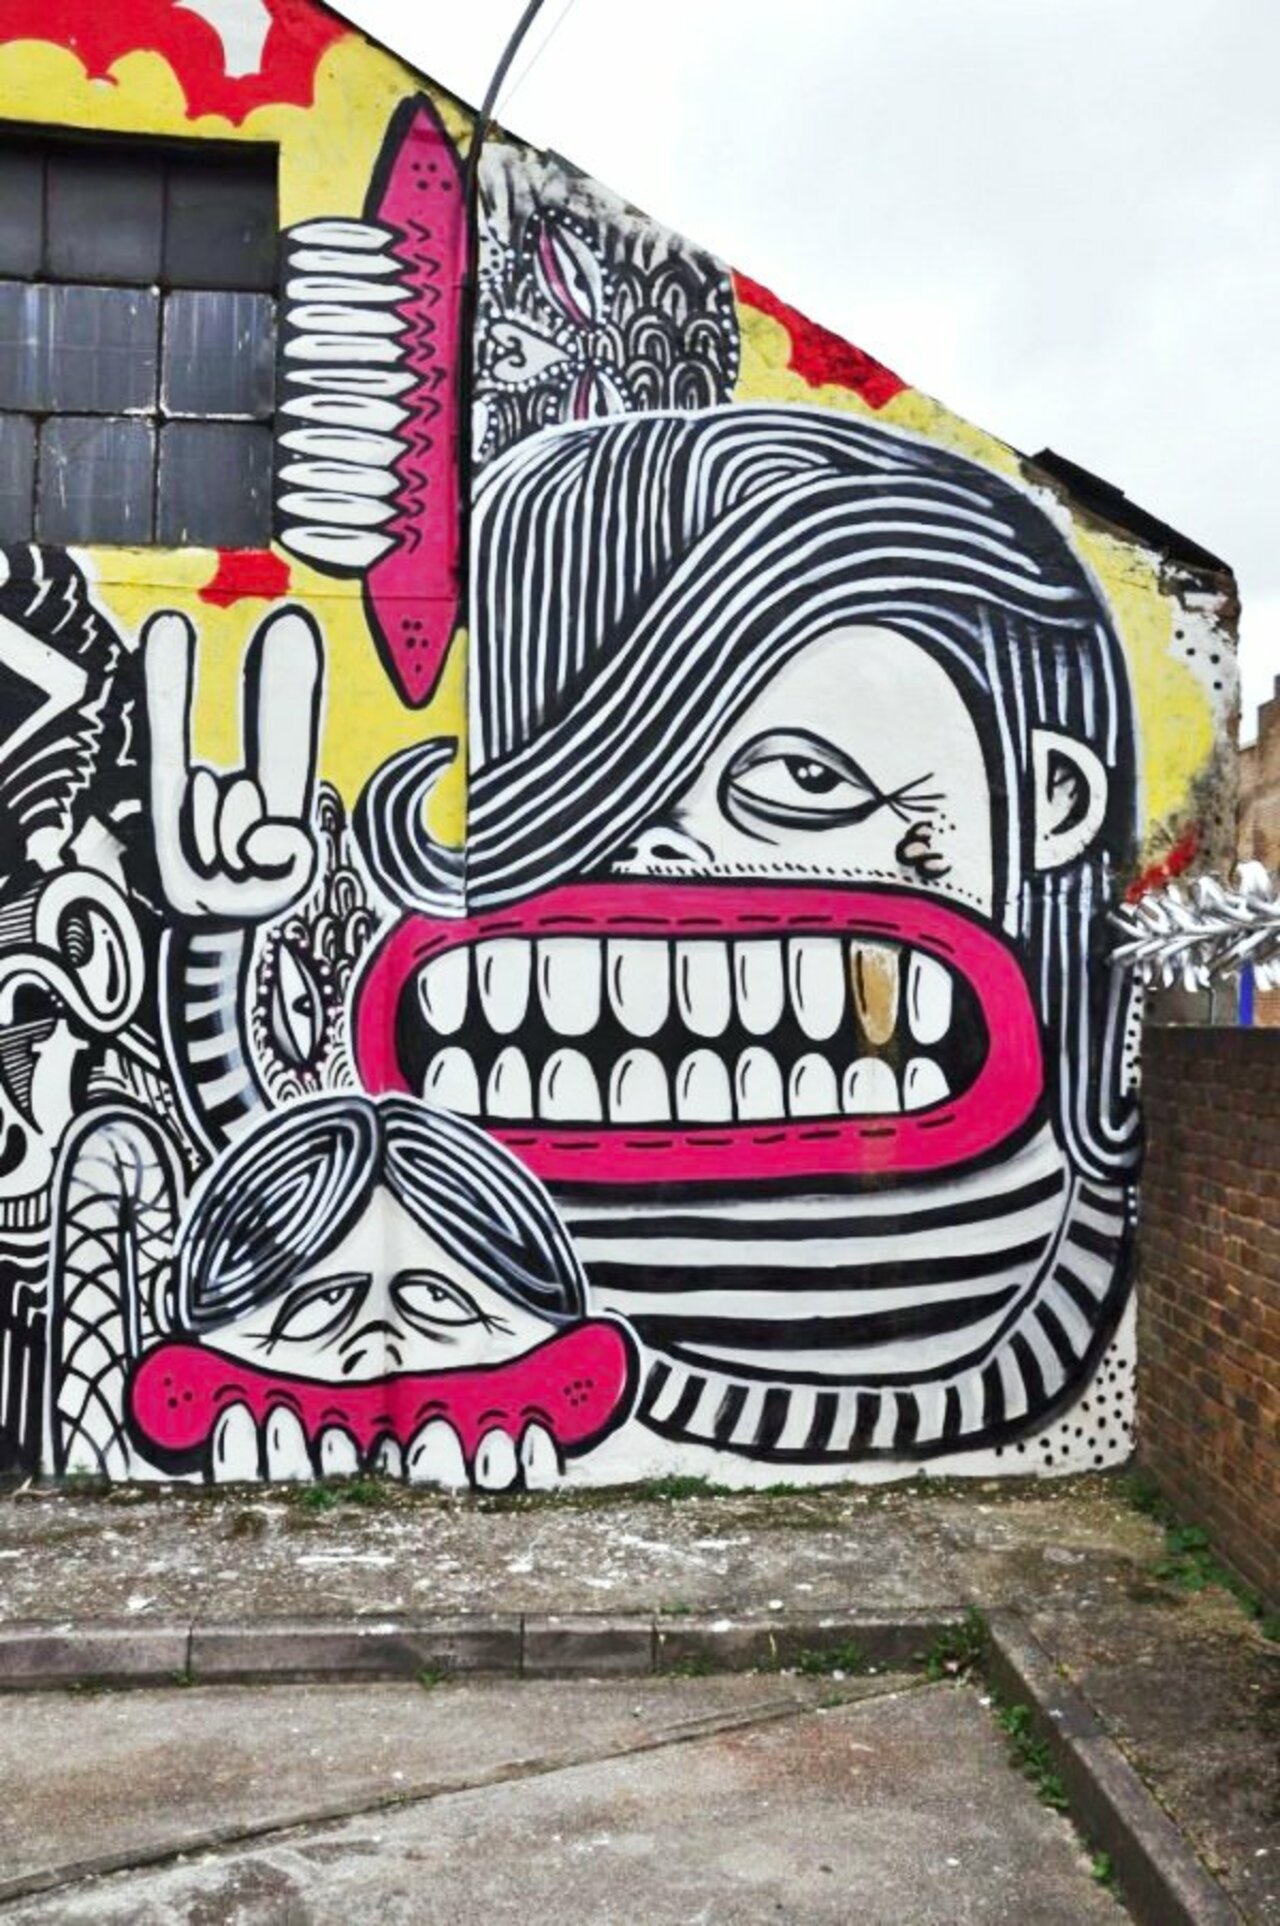 #Streetart  #urbanart #graffiti #mural by English #artist Sweet Toof, https://t.co/kIYY3DTvrk